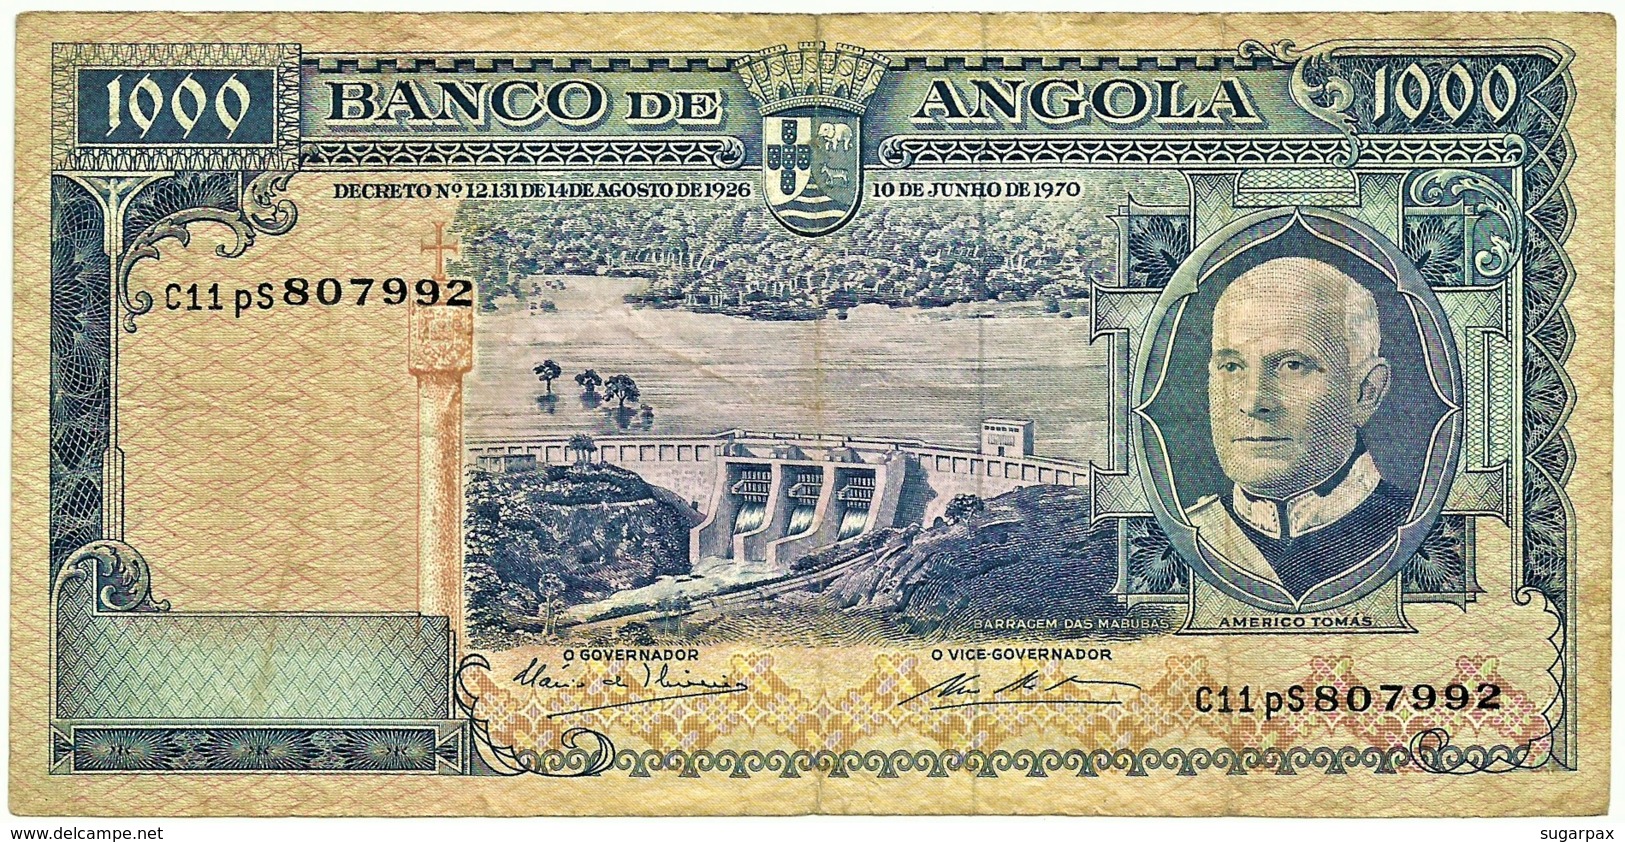 Angola - 1000 Escudos - 10.06.1970 - Pick 98 - Série C11 PS - Américo Tomás - PORTUGAL 1 000 - Angola